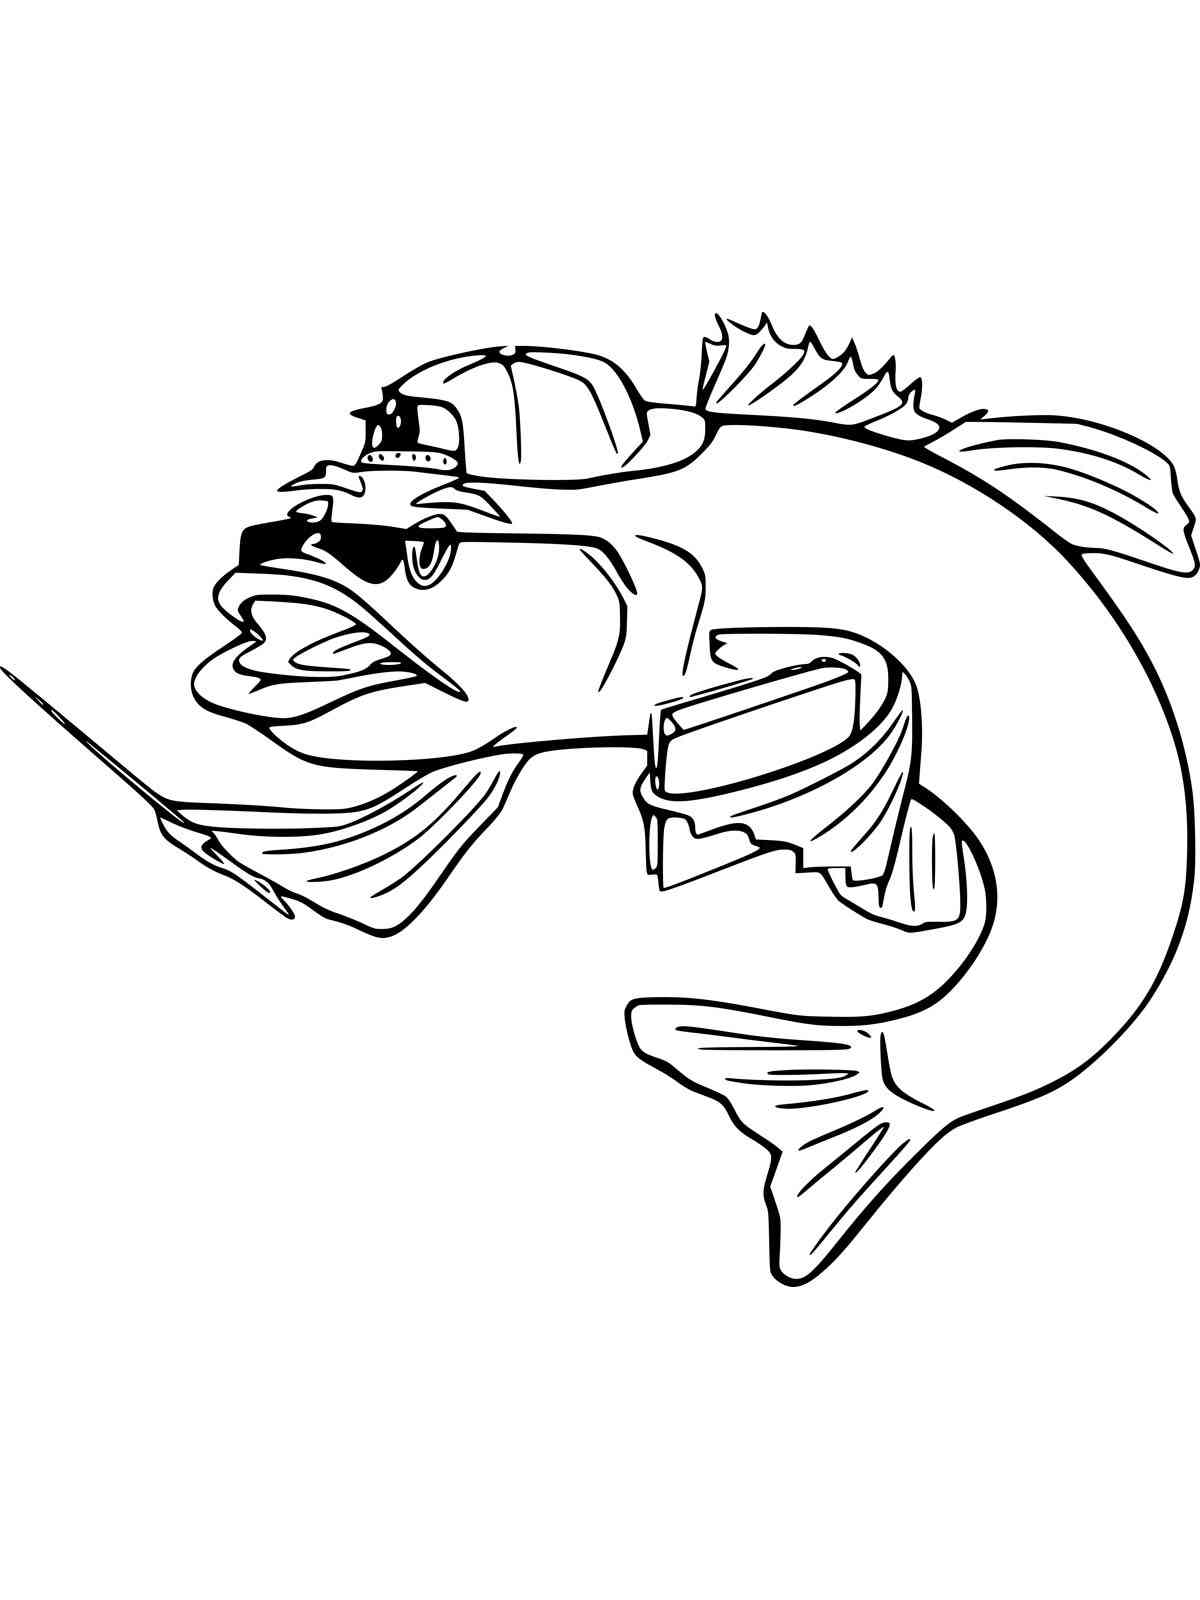 Bass Fish 11 coloring page